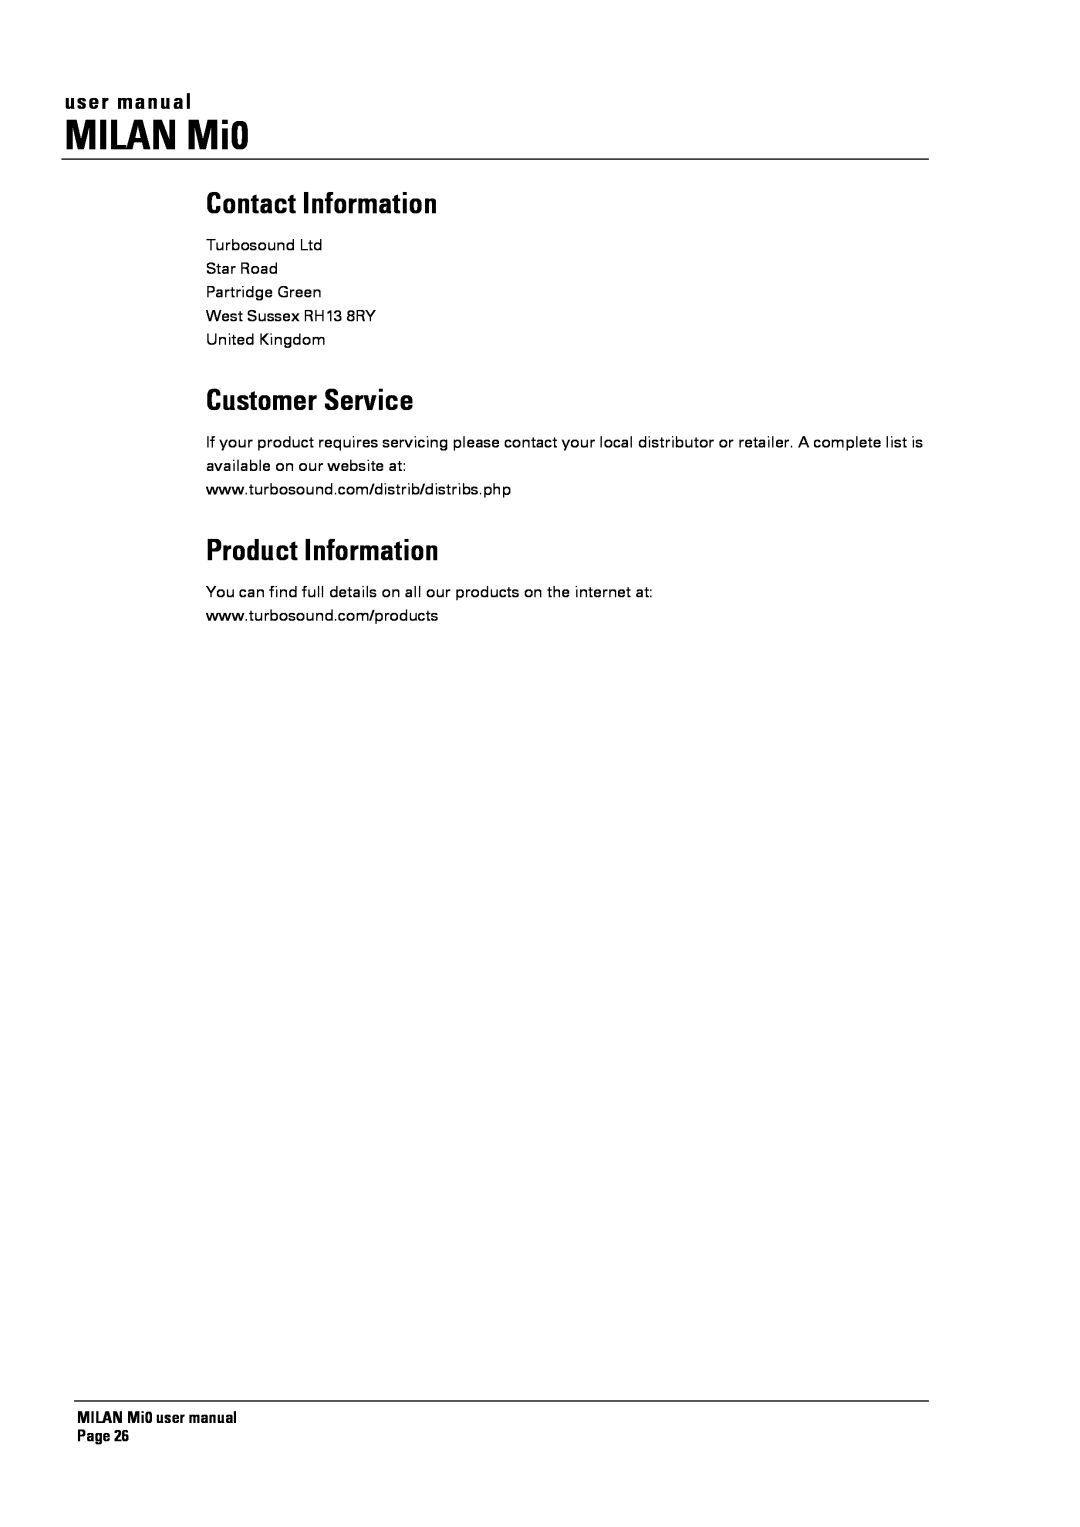 Turbosound Milan Mi0 manual Contact Information, Customer Service, Product Information, MILAN Mi0 